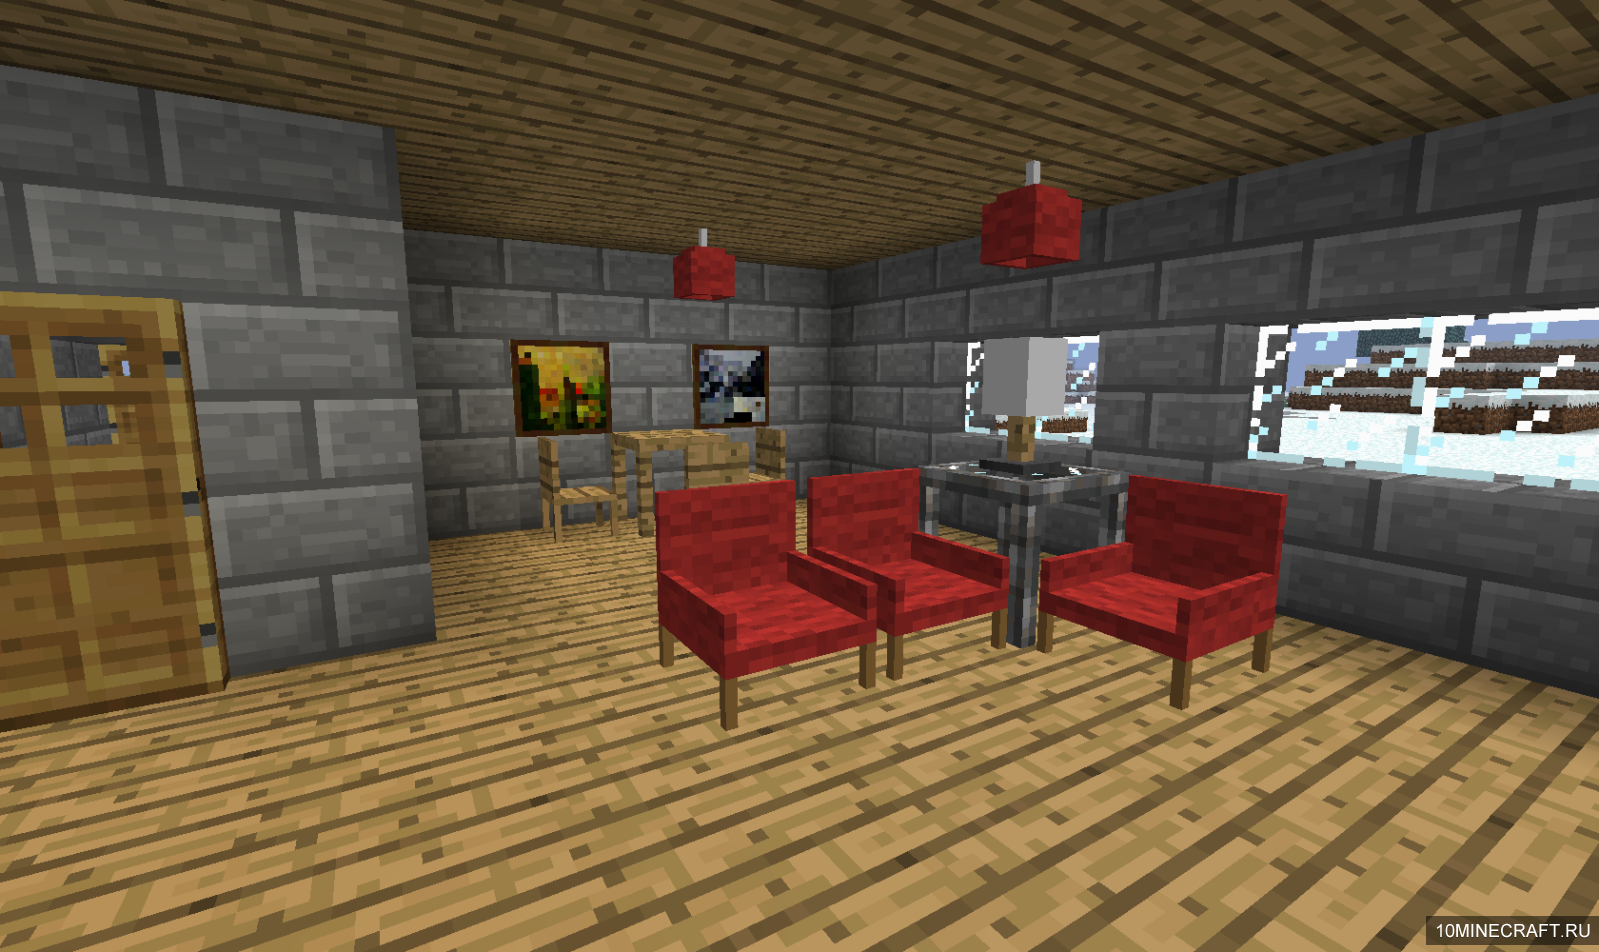 Сборка мебели майнкрафт. Майнкрафт Jammy Furniture Mod. Minecraft 1.12.2 Mod мебель. Мод Furniture 1.12.2. Майнкрафт Furniture Mod 1.7.10.